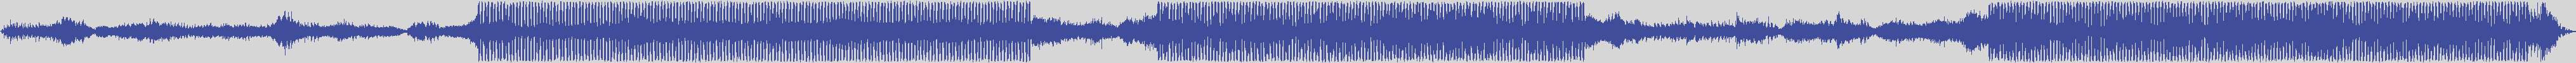 nf_boyz_records [NFY043] Solo Lounge - Calm Quantum [Original Mix] audio wave form